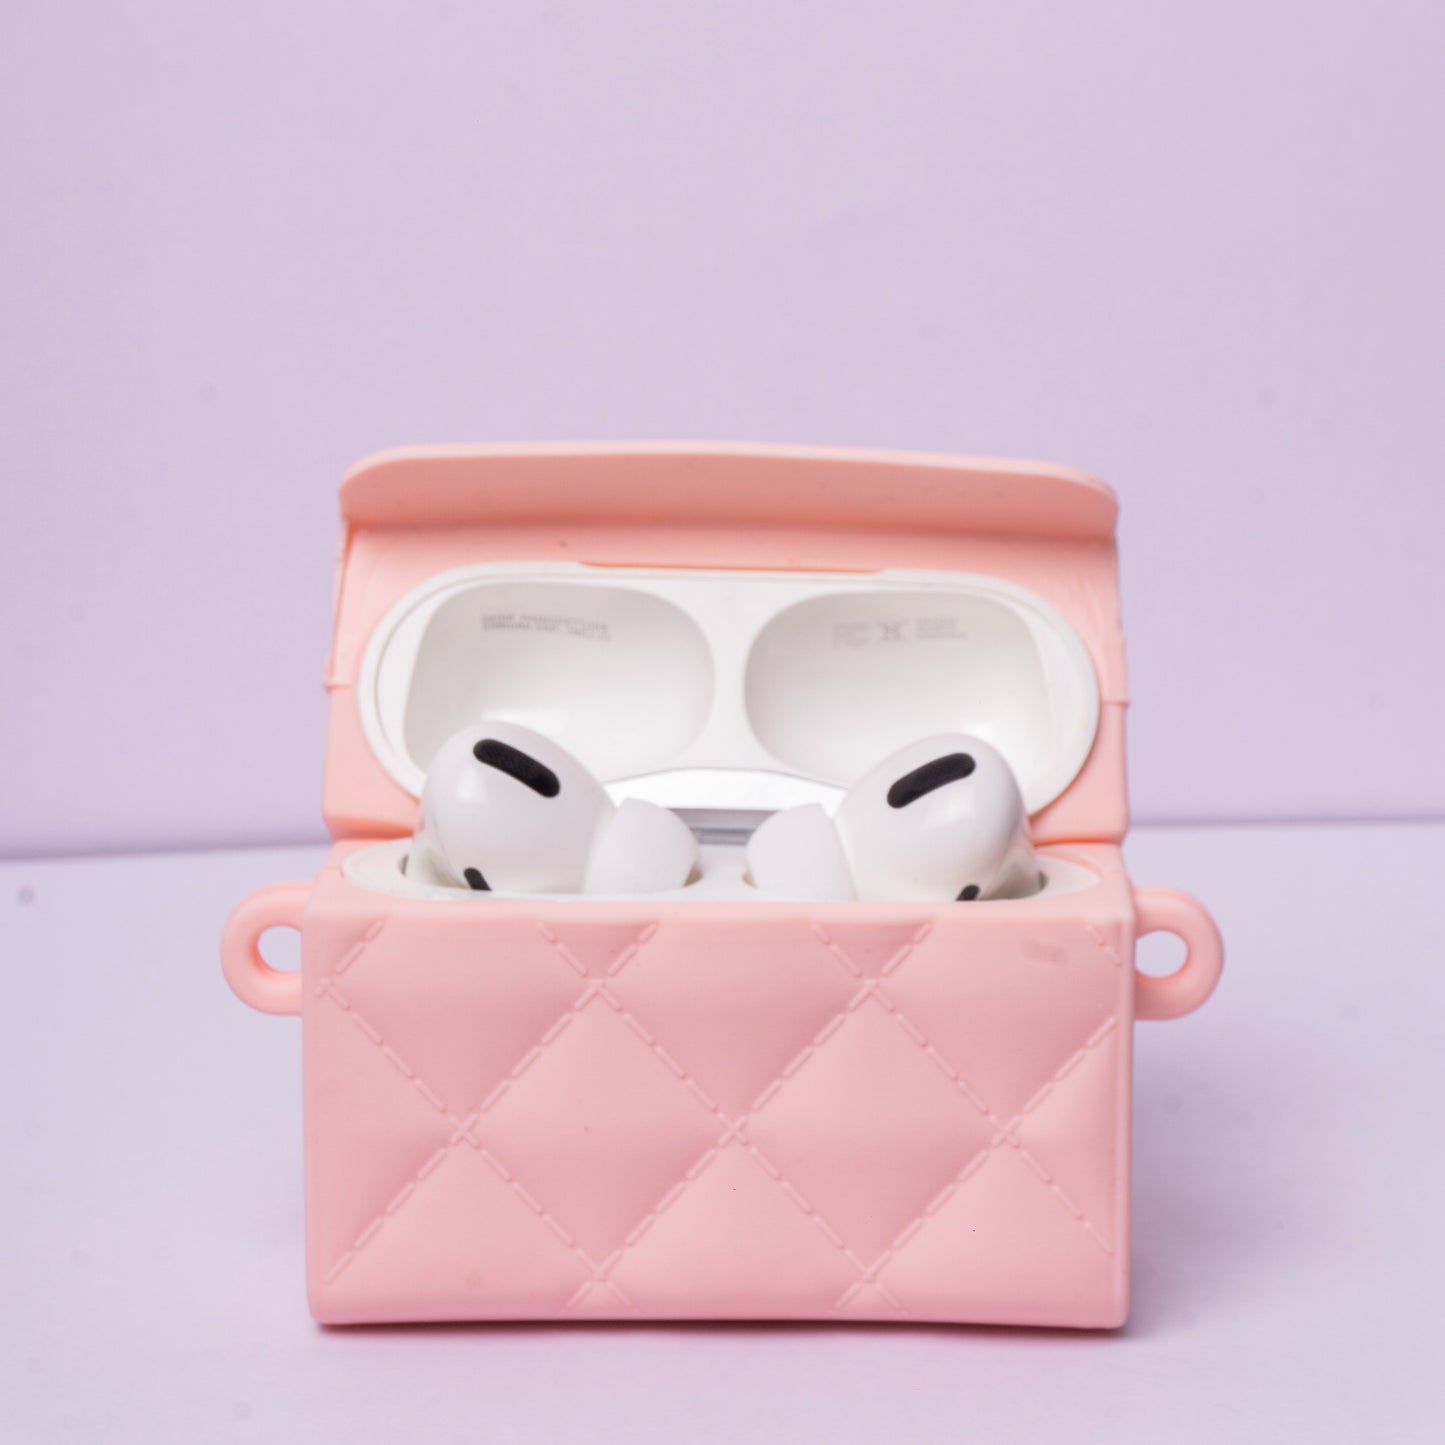 Pink Chanel Handbag Silicon Cover